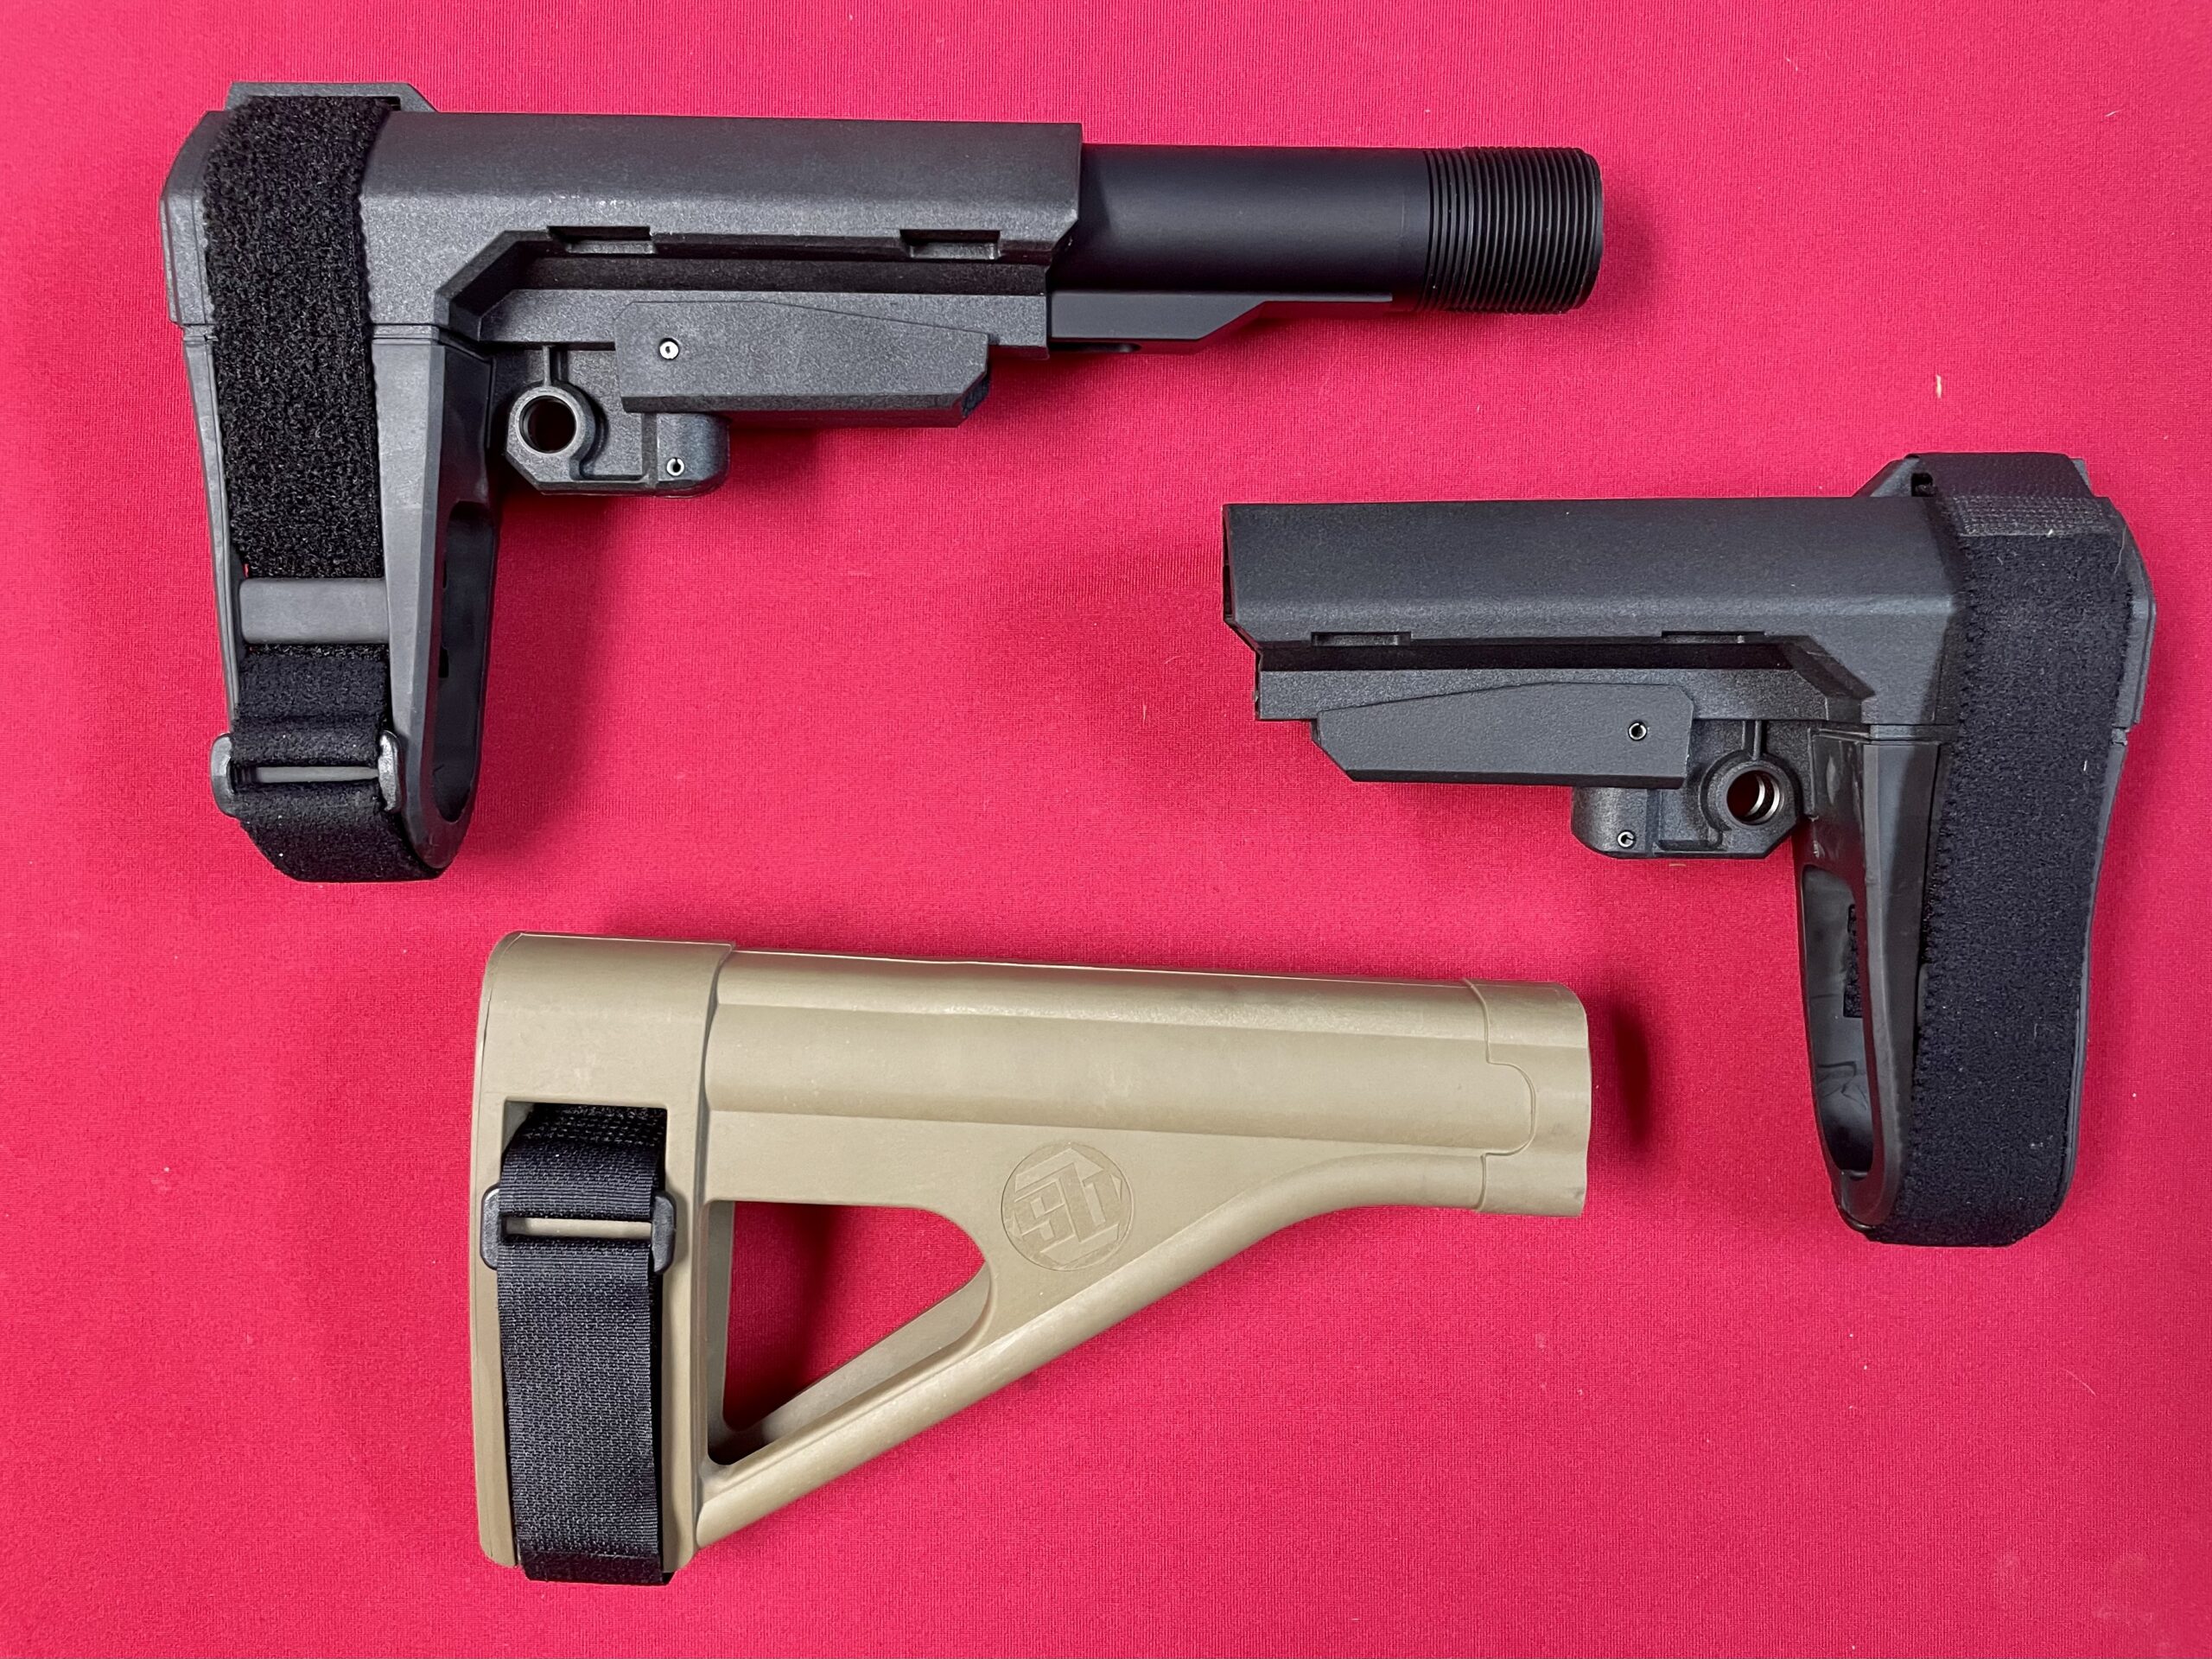 Converting your AR pistol - Crosshairs Texas